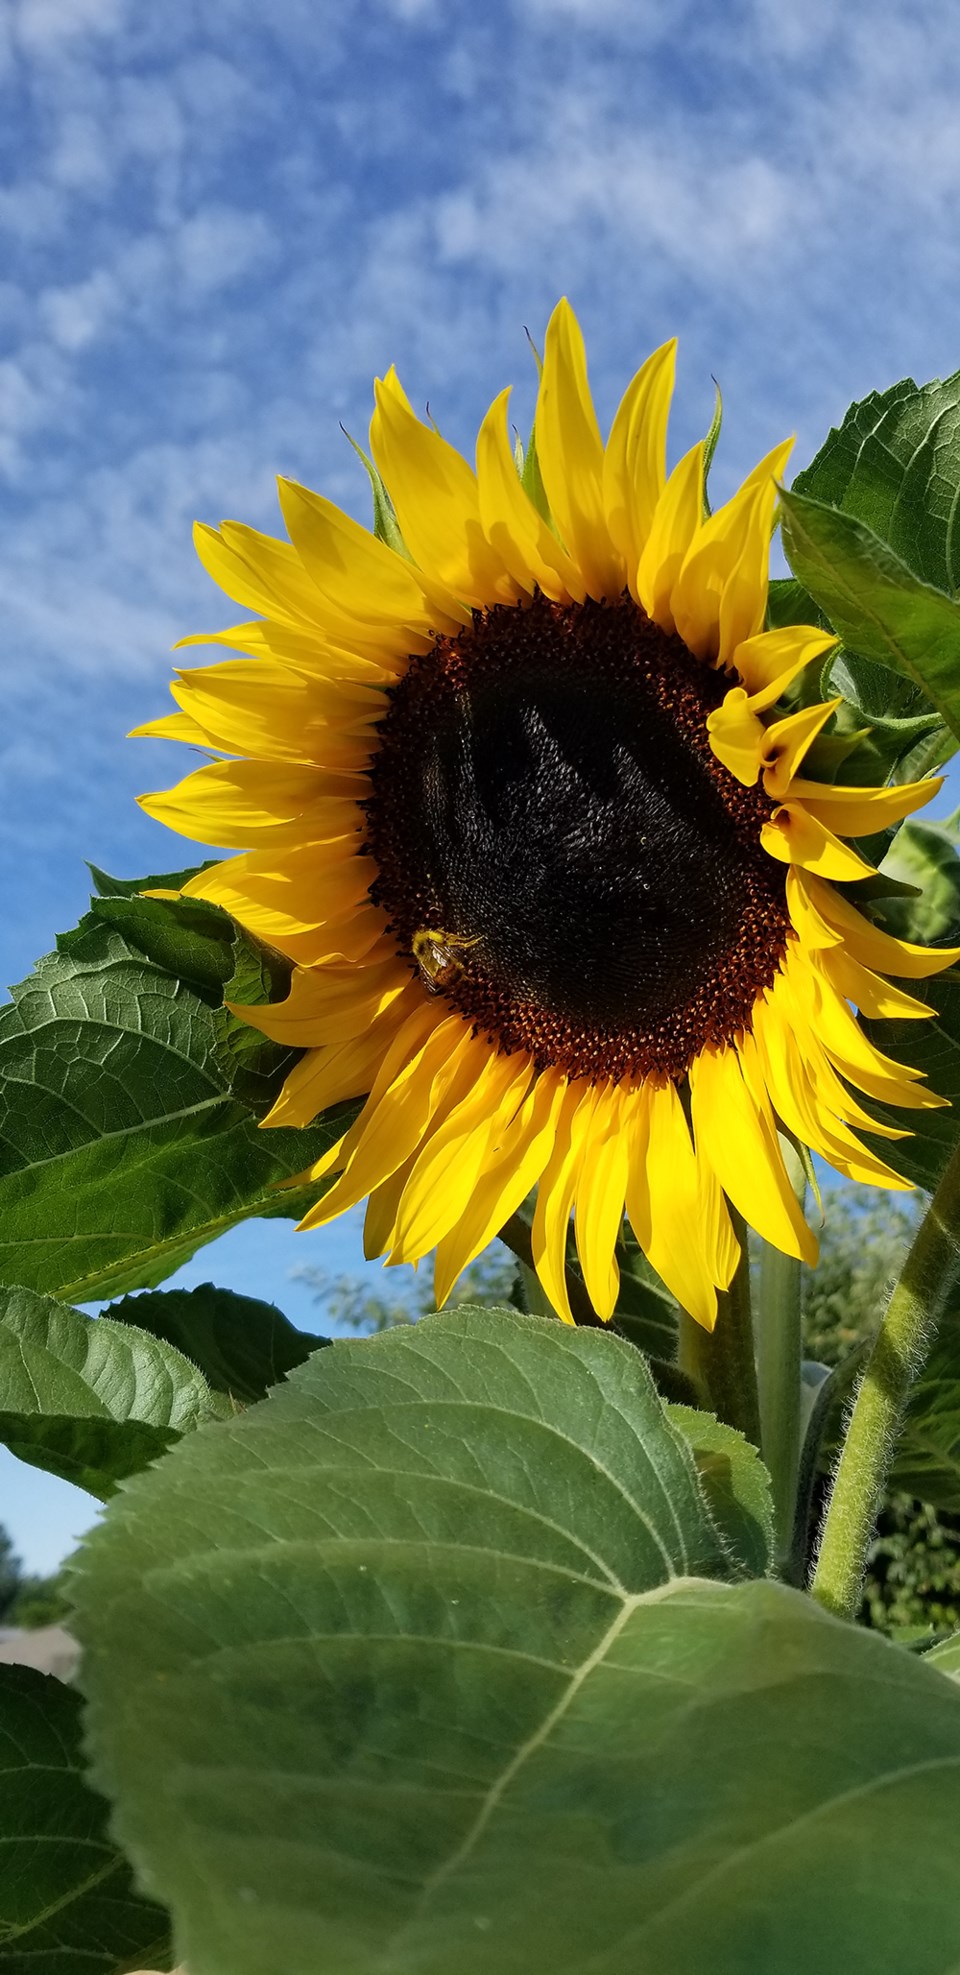 july_26_lisa_hansen_sunflower_bee